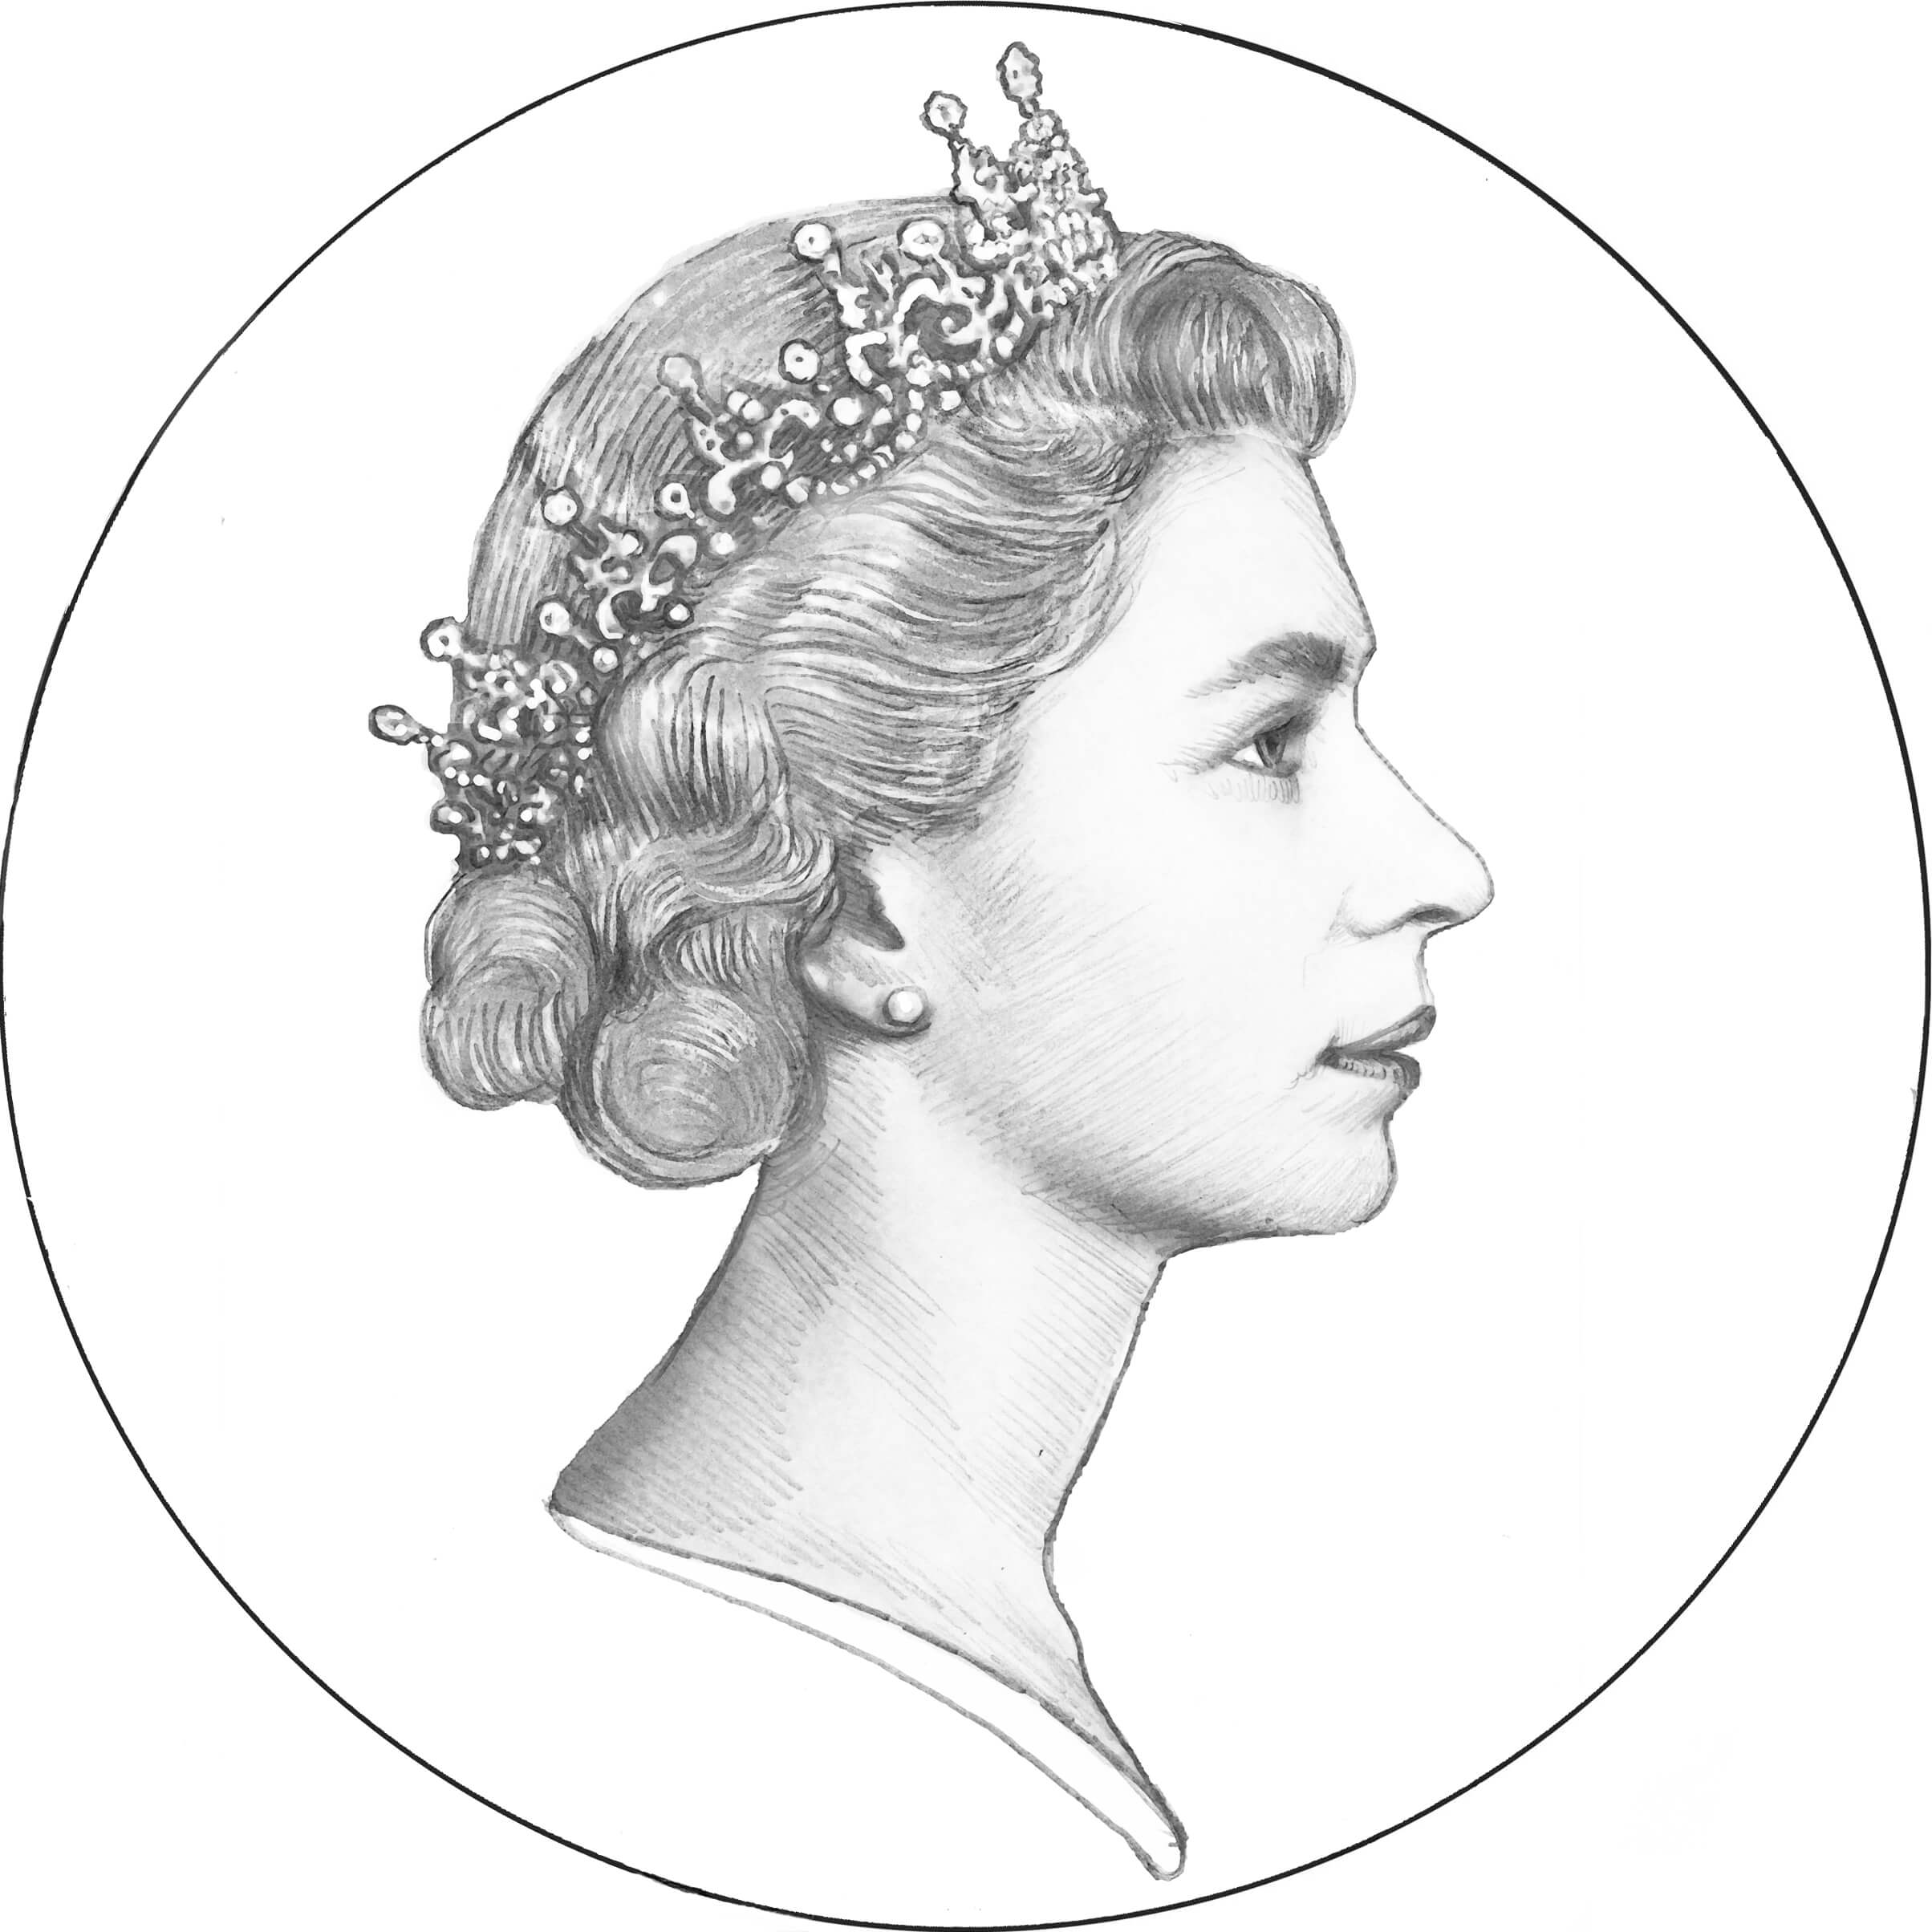 QEII 50s - The world's longest reigning living monarch — celebrating Queen Elizabeth II's birthday